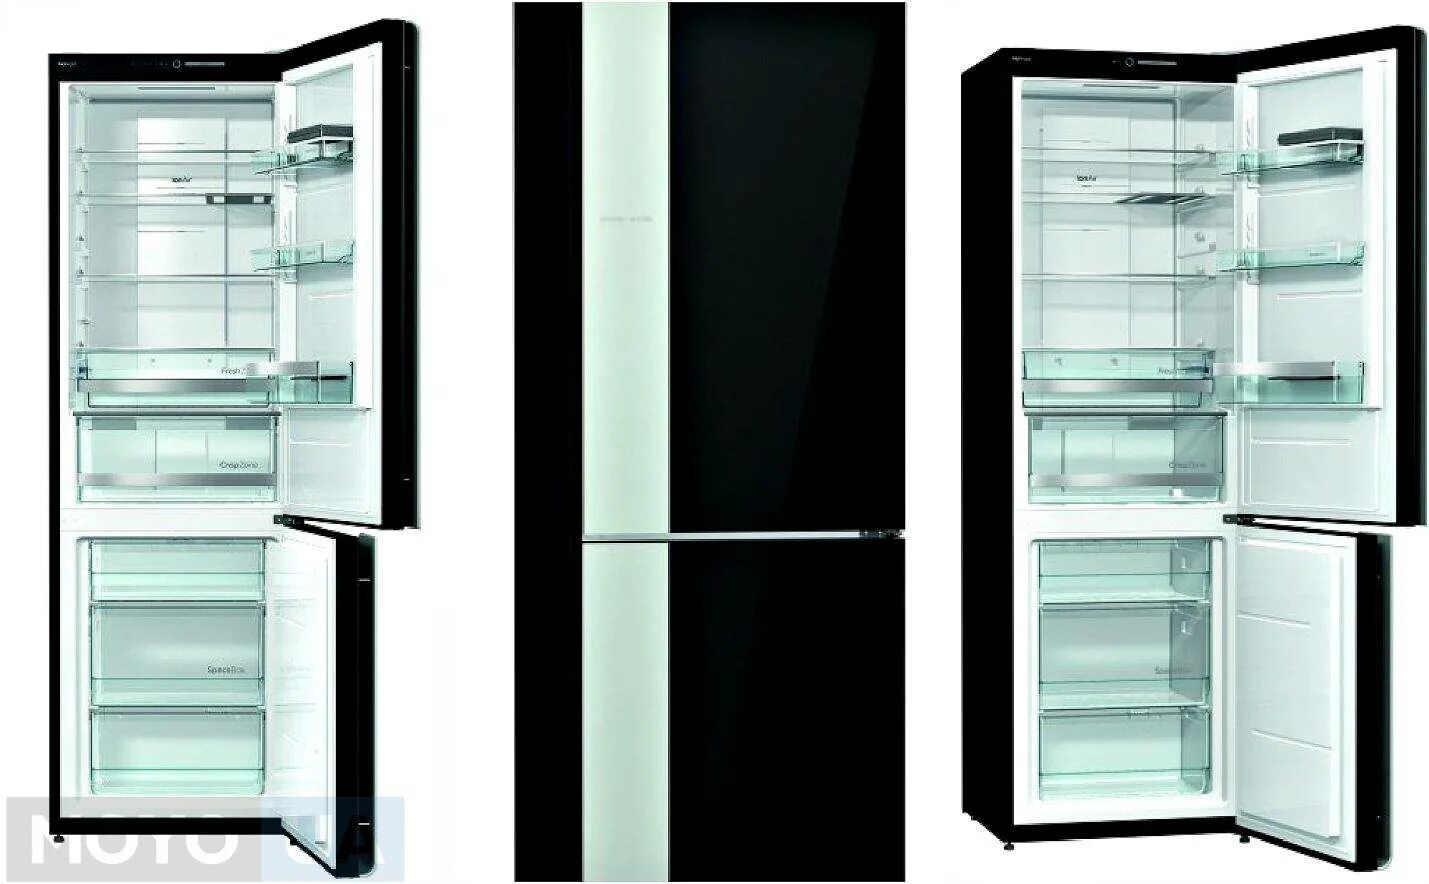 Холодильник Gorenje nrk6202aw4. Холодильник горенья модель nrk6191gx. Gorenje NRK 6202 чёрный. Холодильник Gorenje модель nrk68syb. Ремонт холодильника горенье